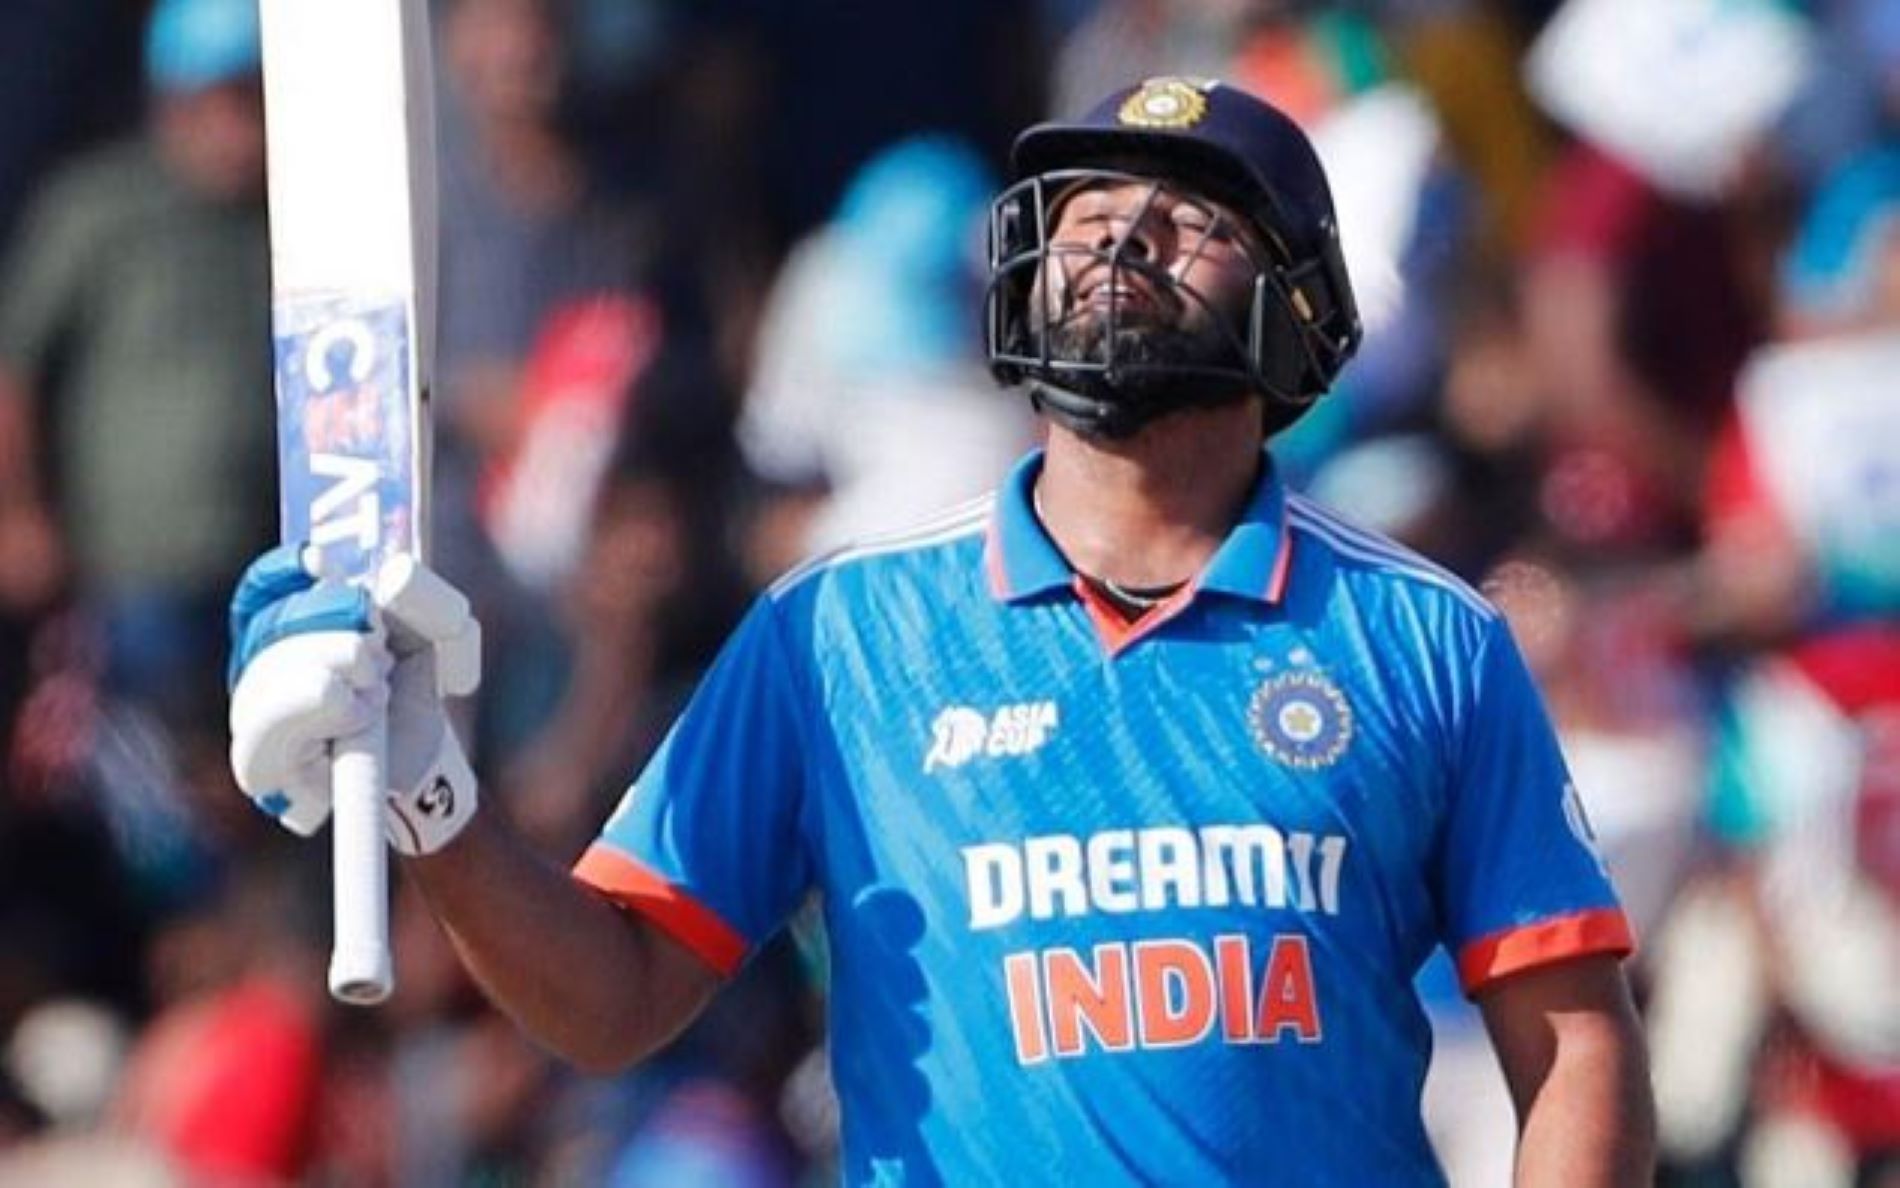 Rohit Sharma recently achieved the rare 10,000 ODI runs feat